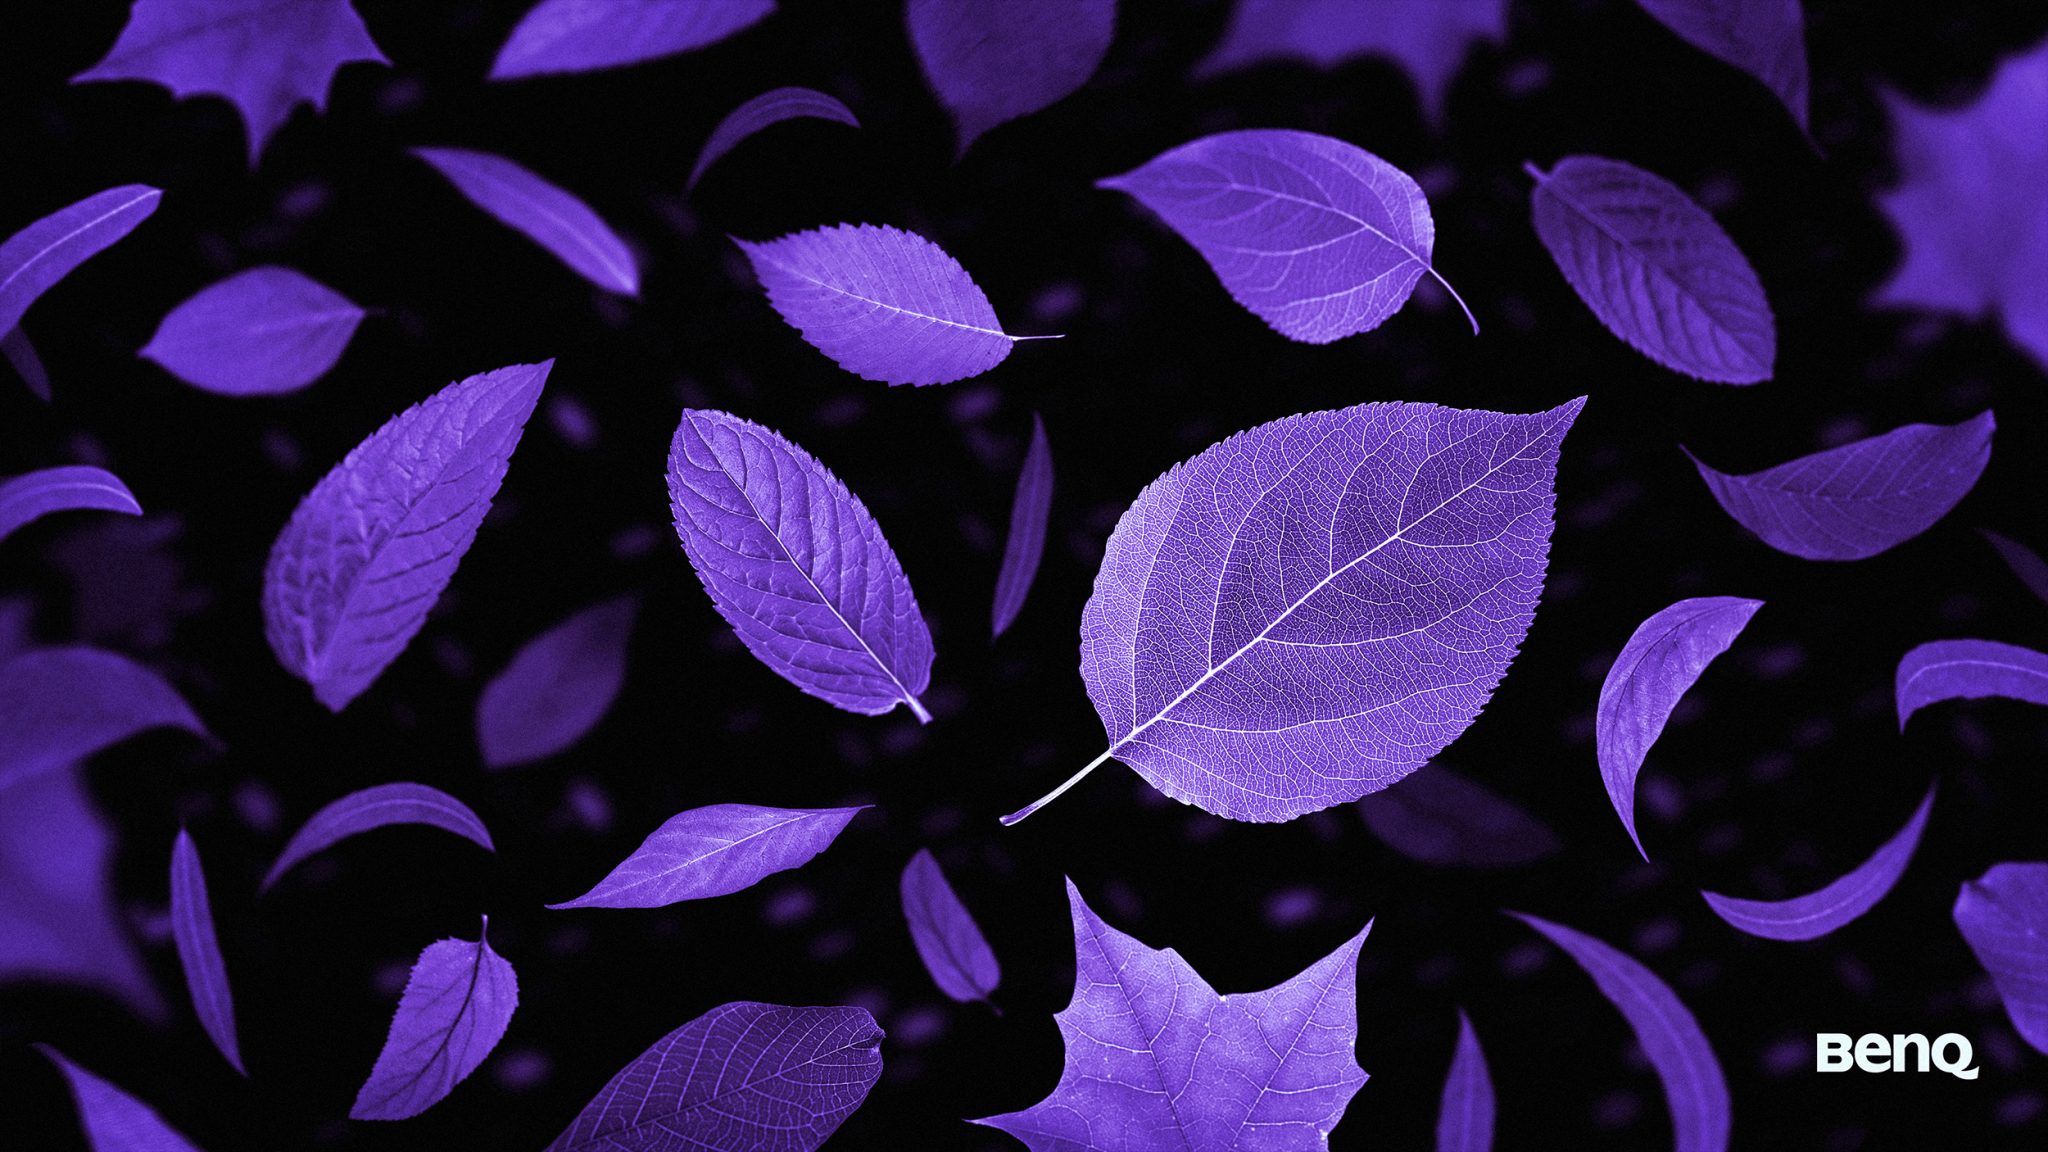 benq wallpaper,purple,violet,lilac,leaf,pattern